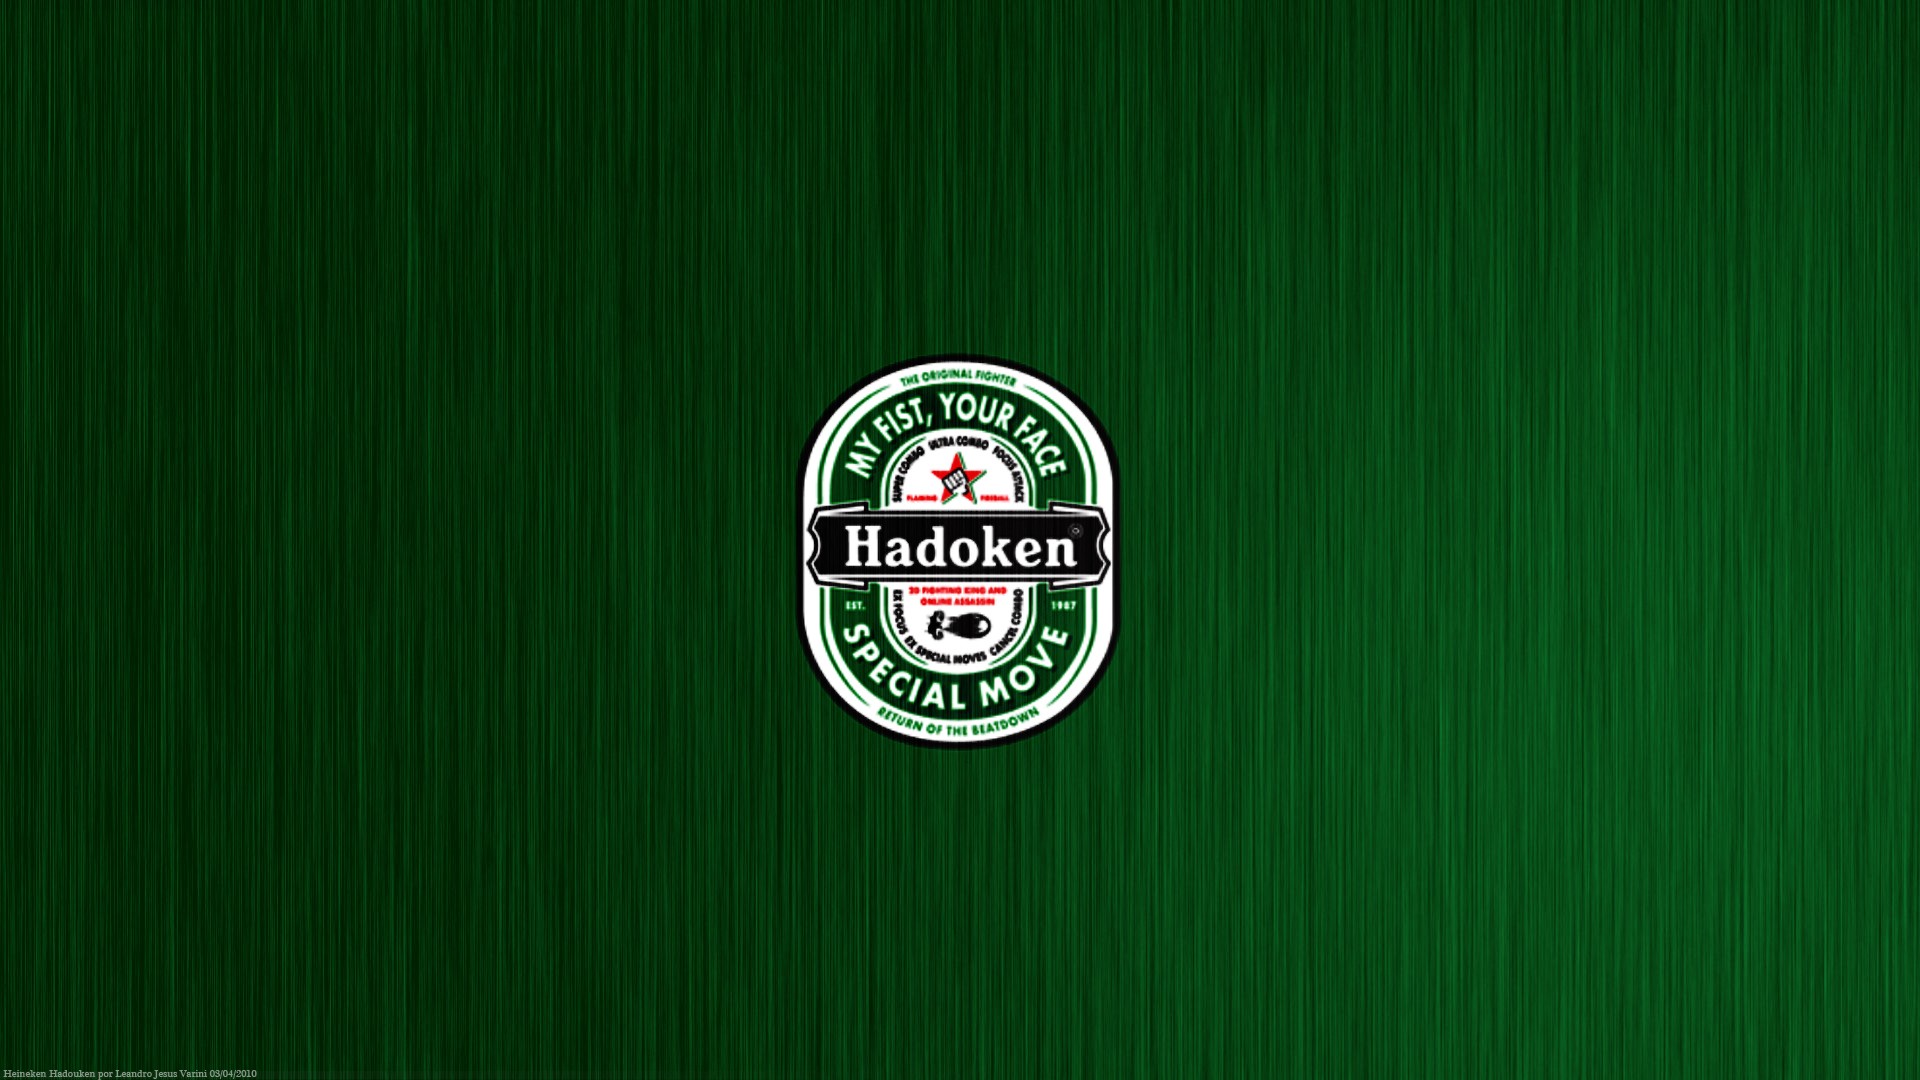 Street Fighter, Heineken, logos - desktop wallpaper